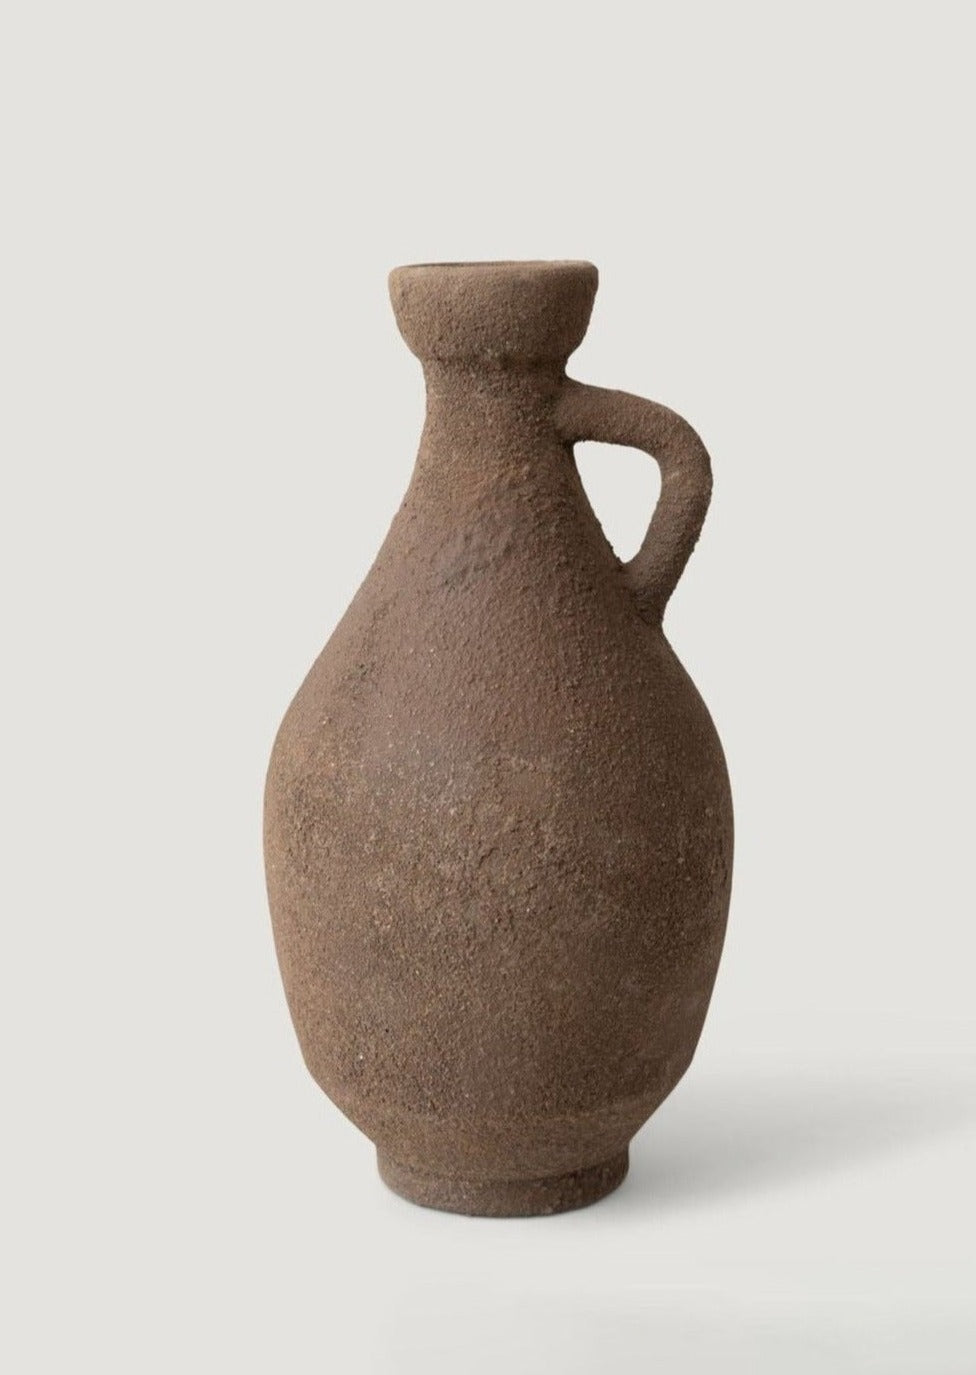 Clay Vase in Brown by Jitana at Afloral